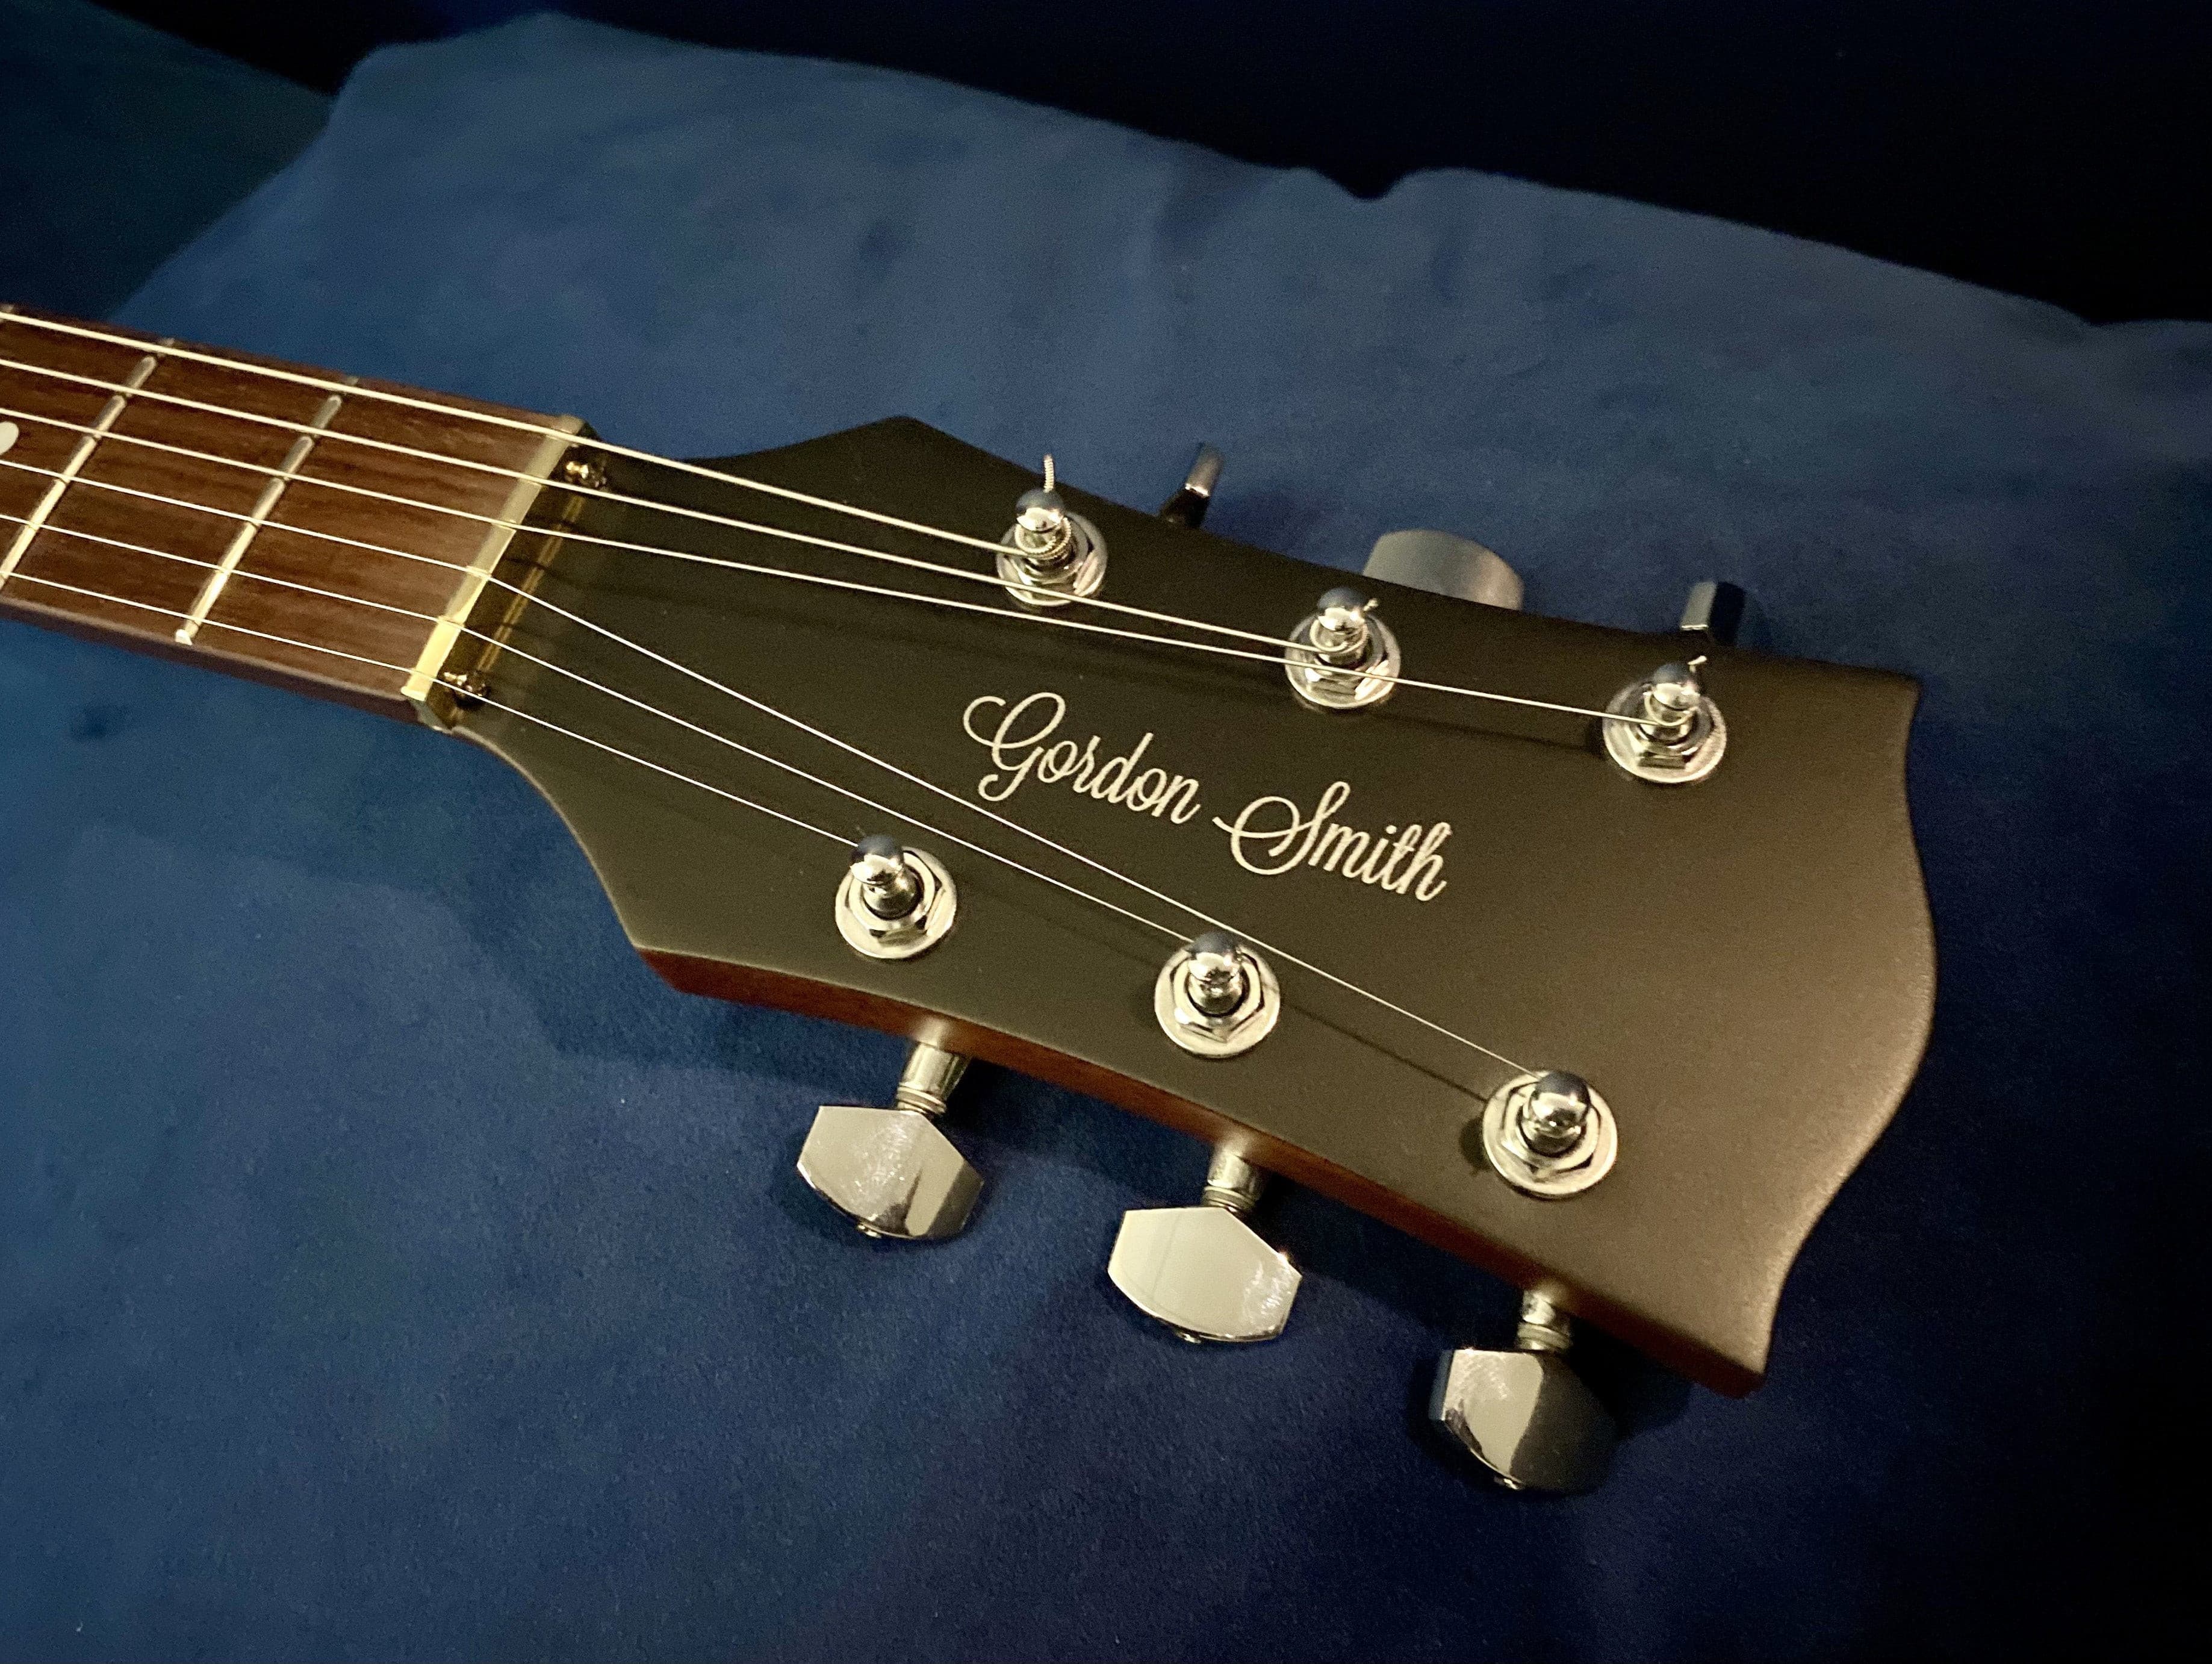 Gordon Smith SG2 Fireburst, Electric Guitar for sale at Richards Guitars.